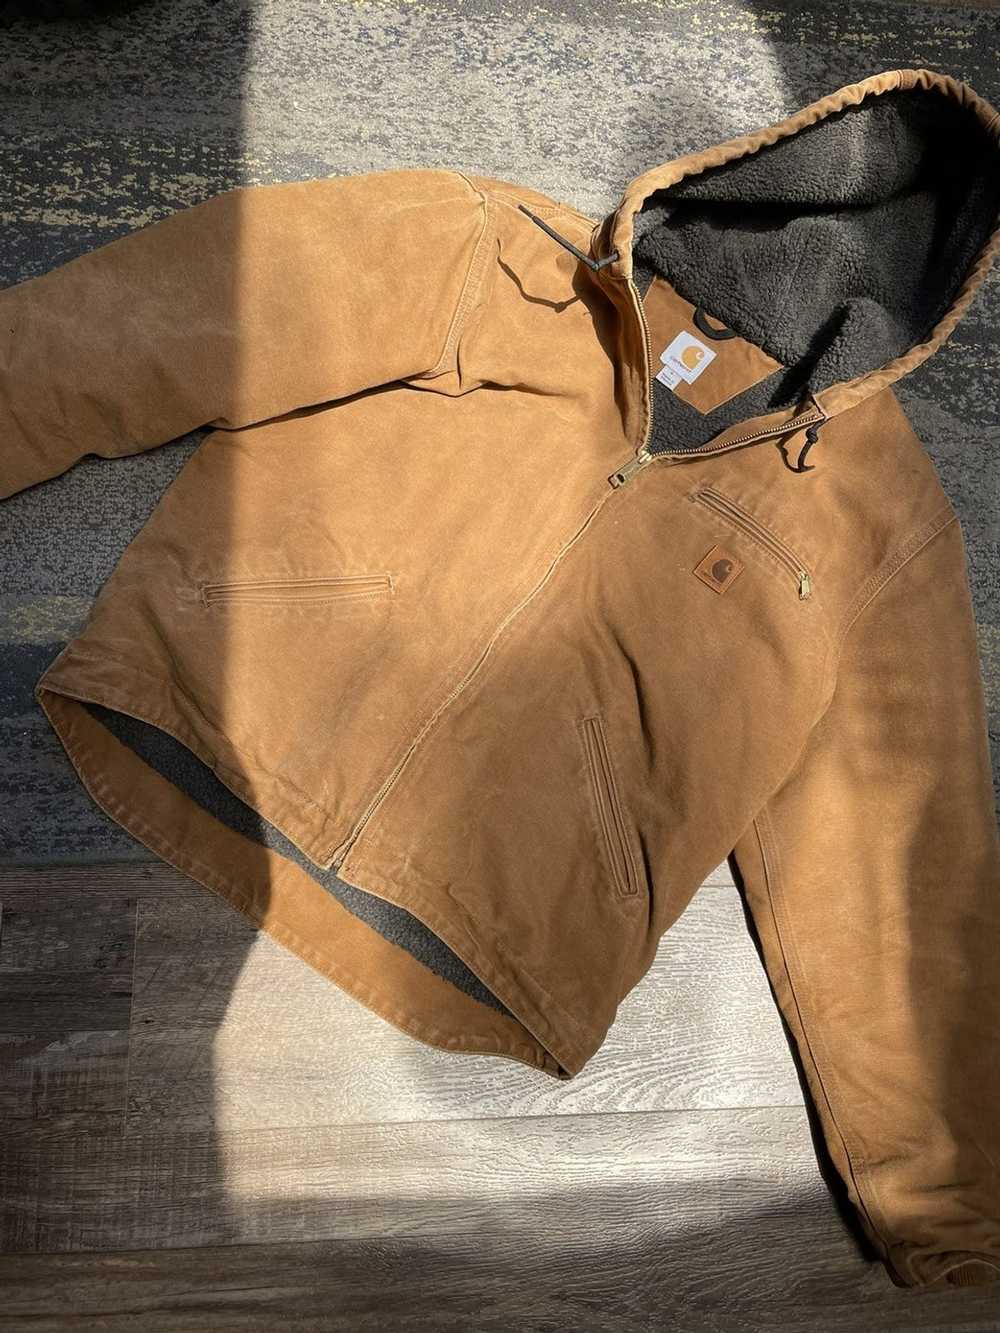 Carhartt Carhart jacket - image 1